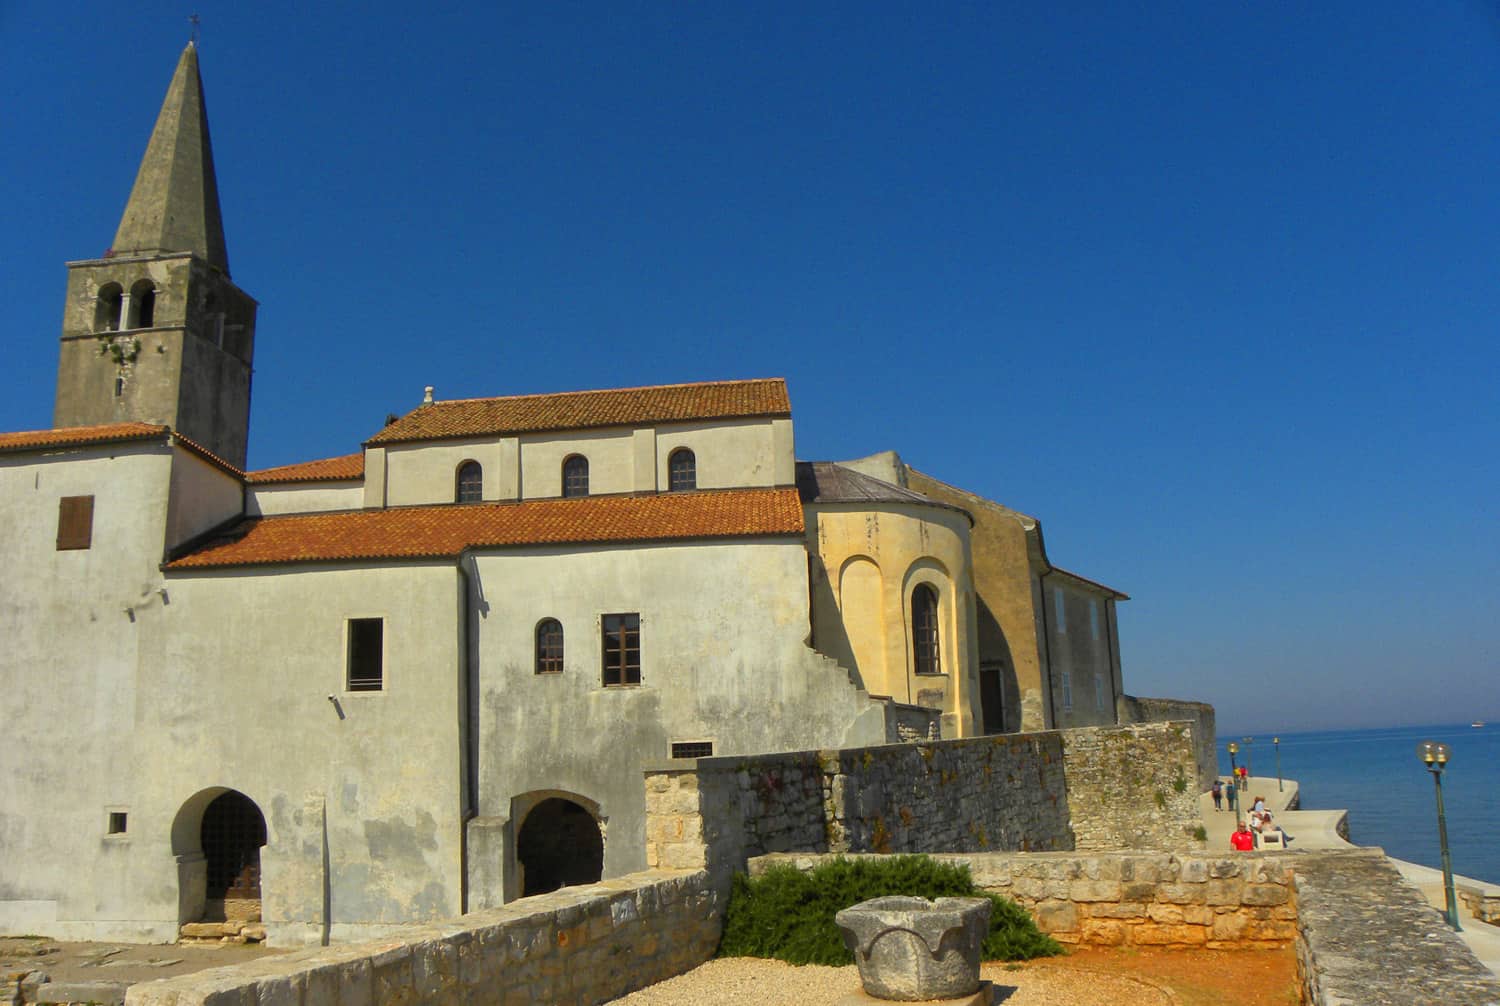 Porec’s UNESCO World Heritage Site – the Euphrasian Basilica